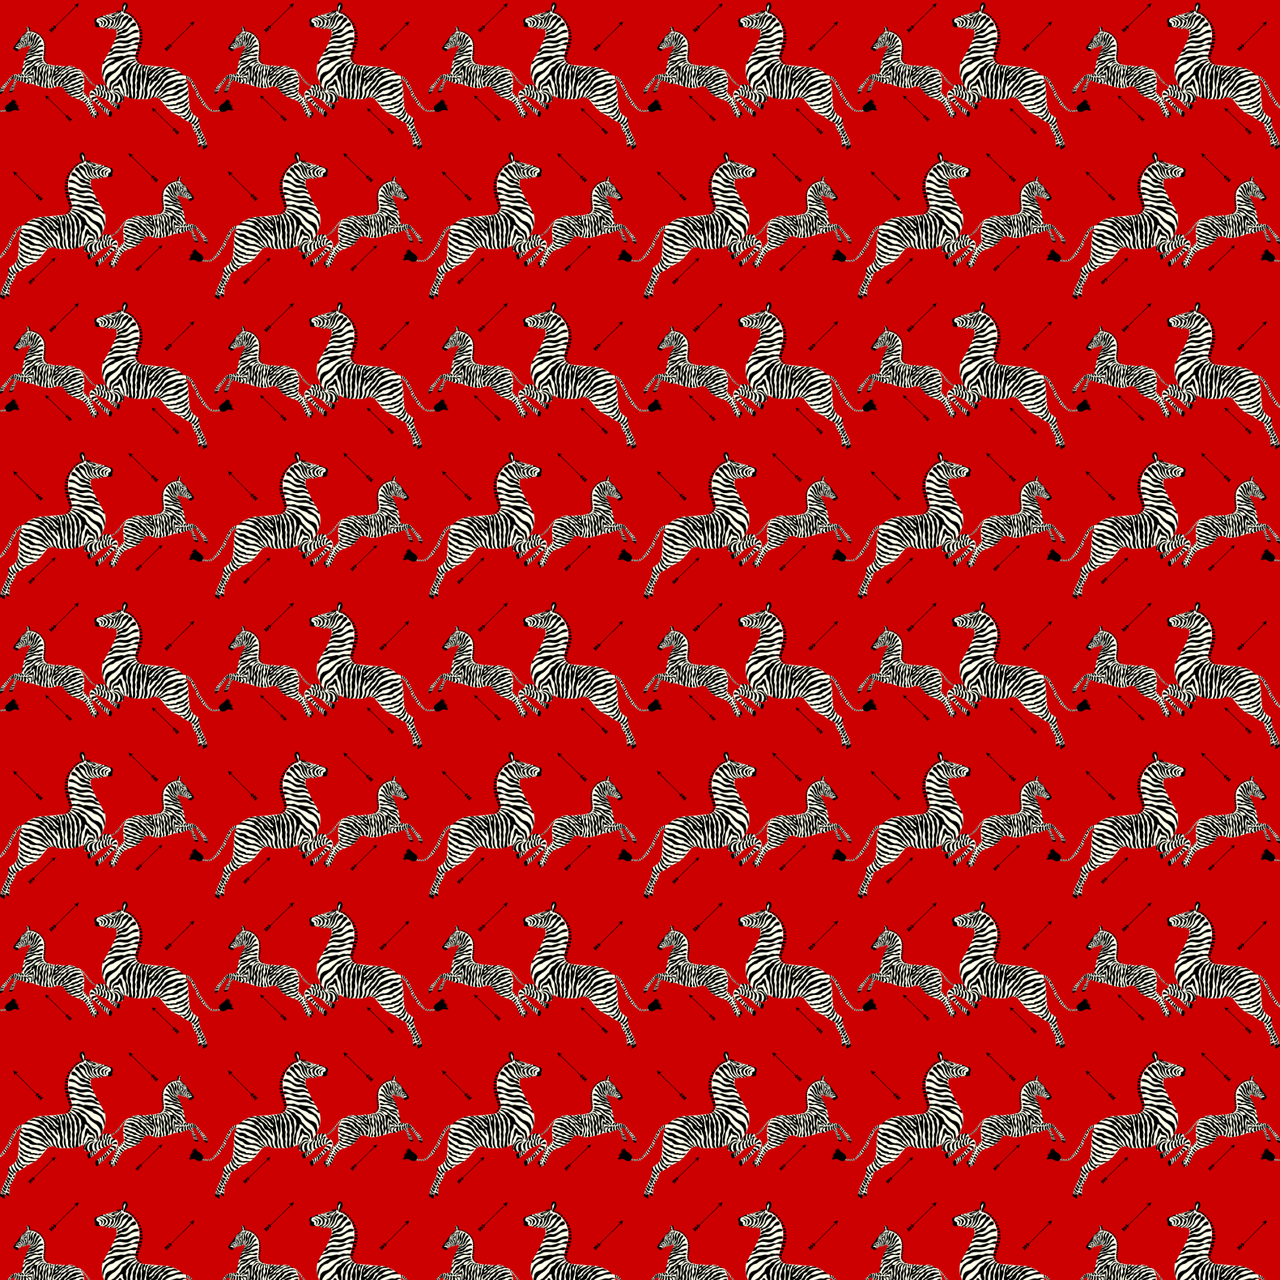 Red zebra wallpaper